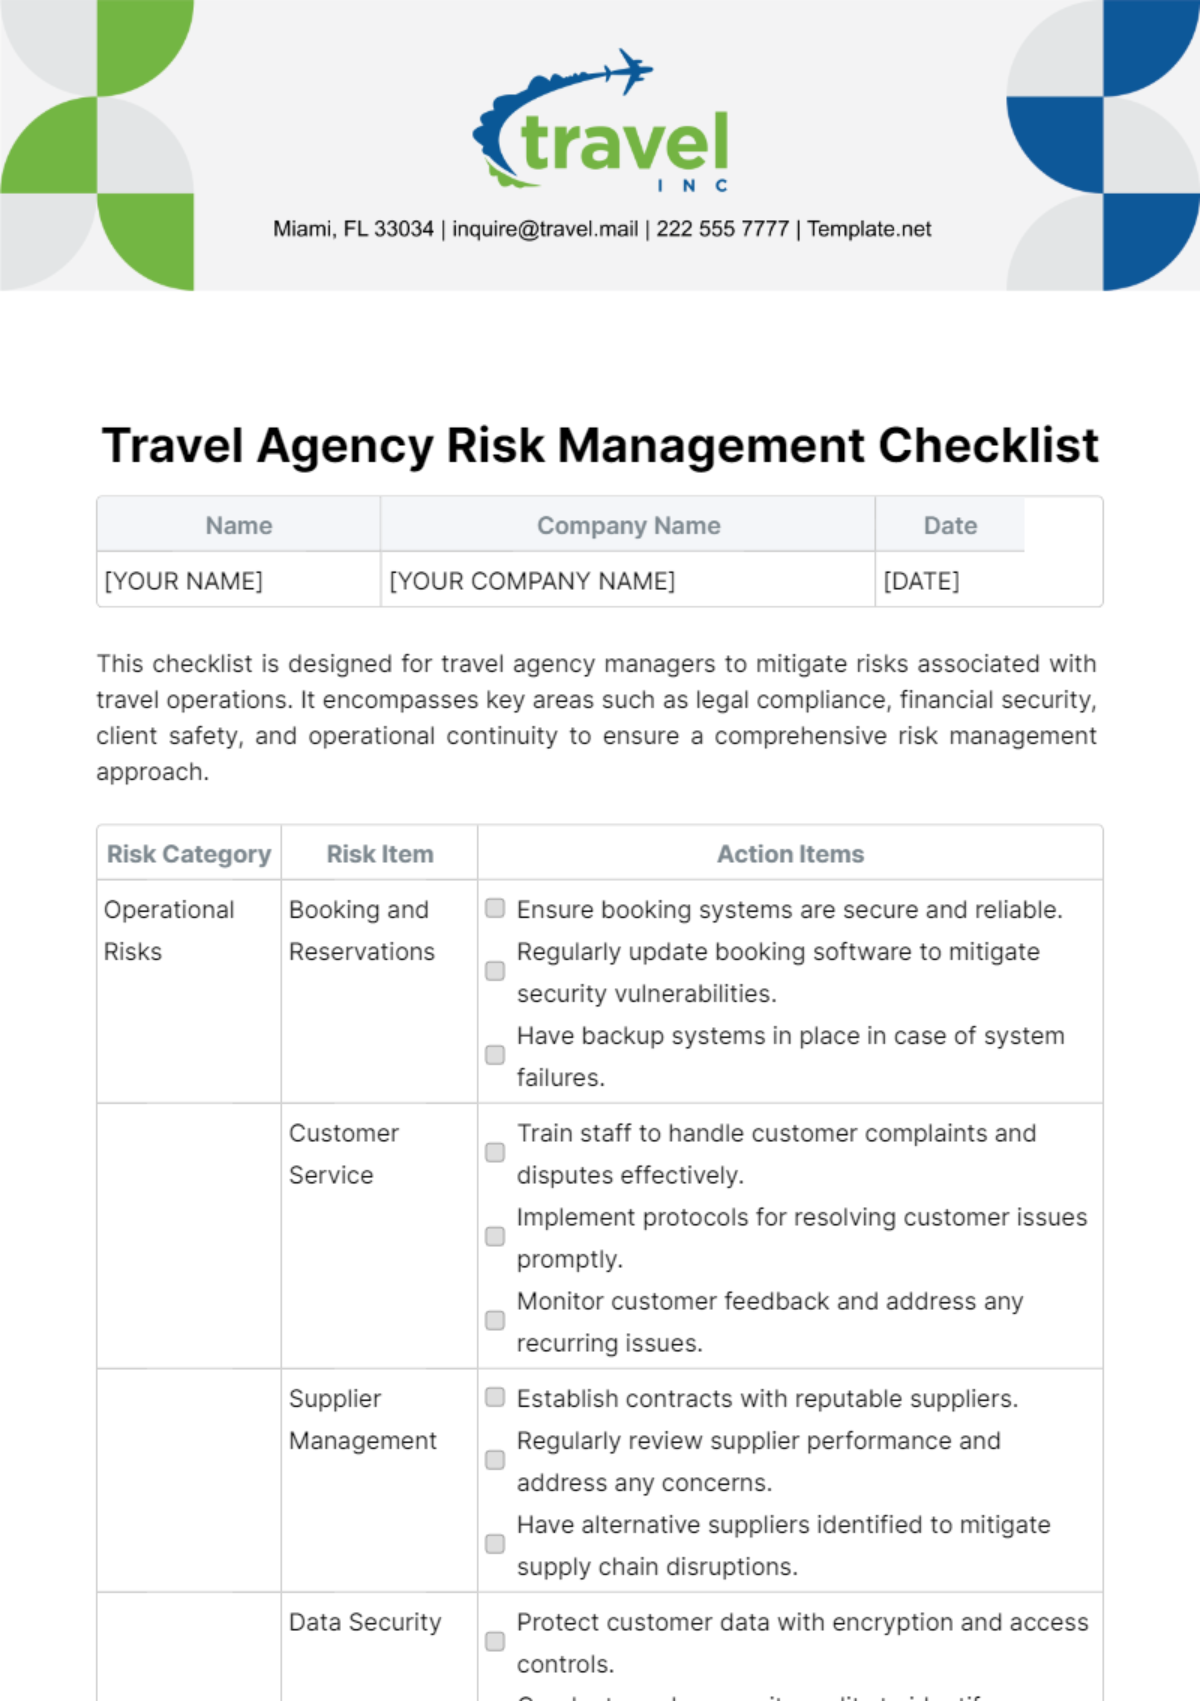 Travel Agency Risk Management Checklist Template